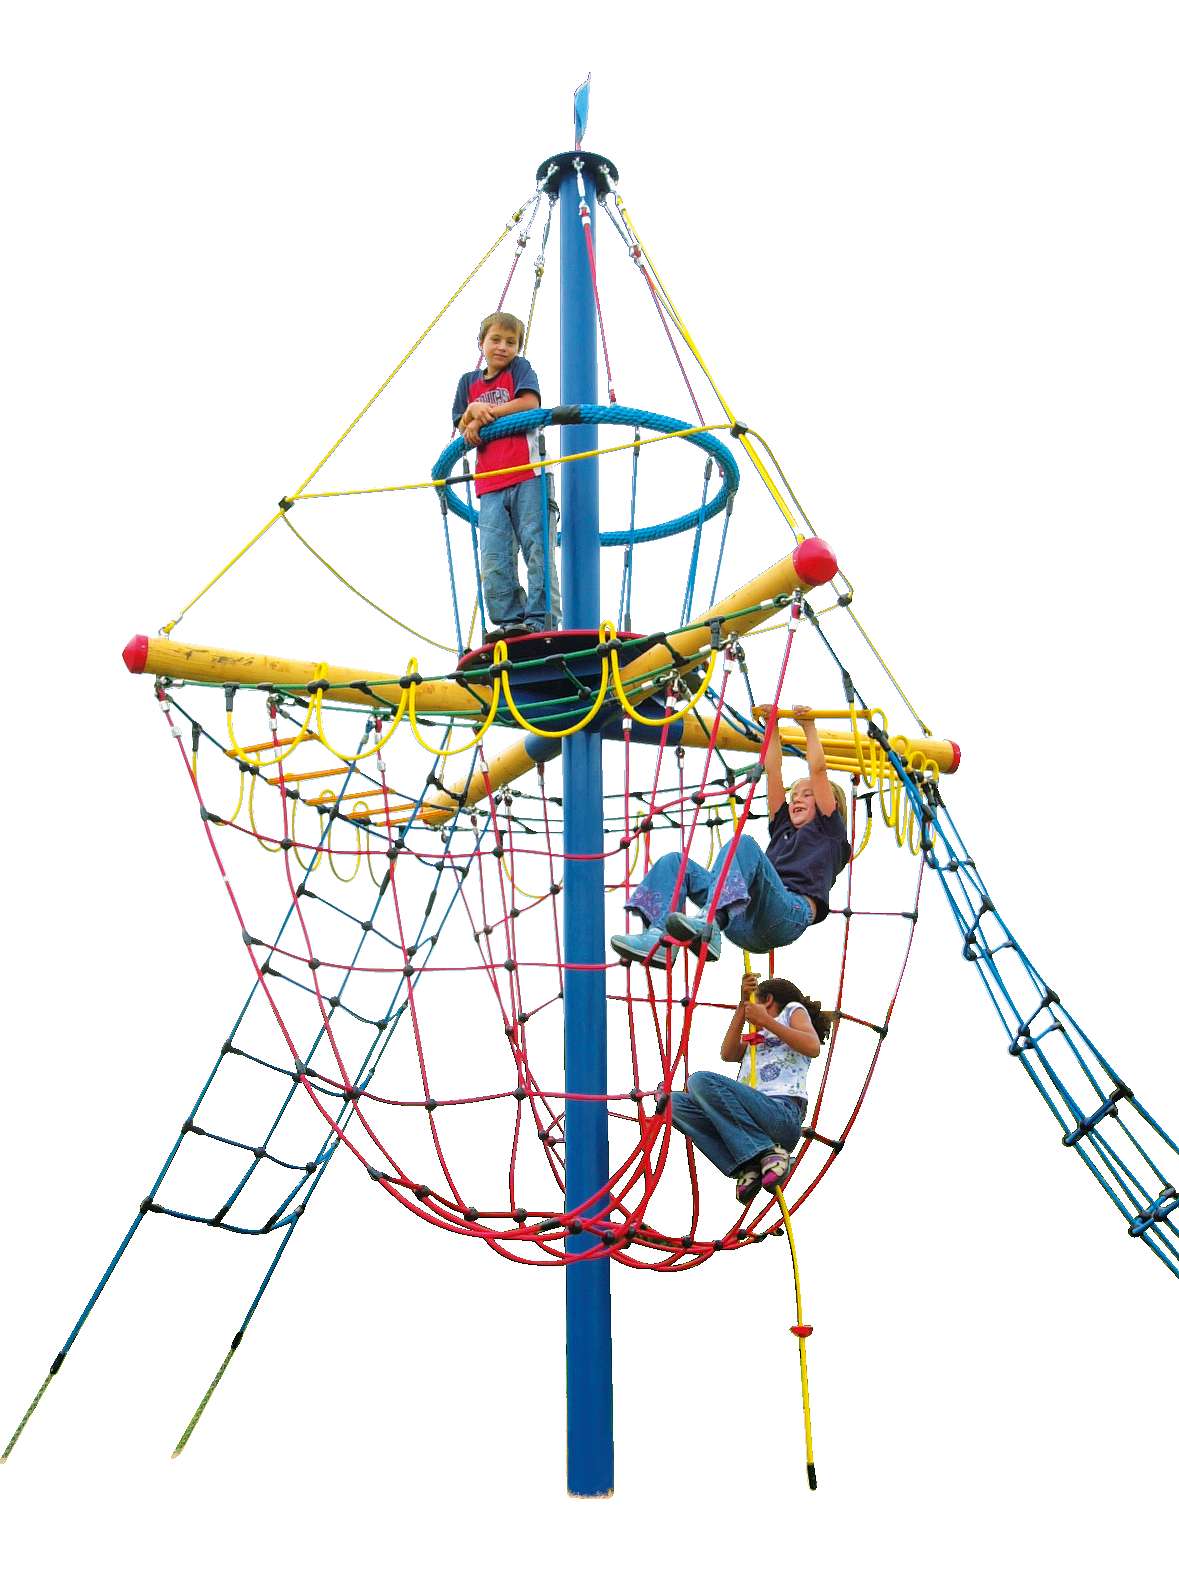 Huck Seiltechnik Seilspielgerät "Piratenturm Störtebecker" von Huck Seiltechnik